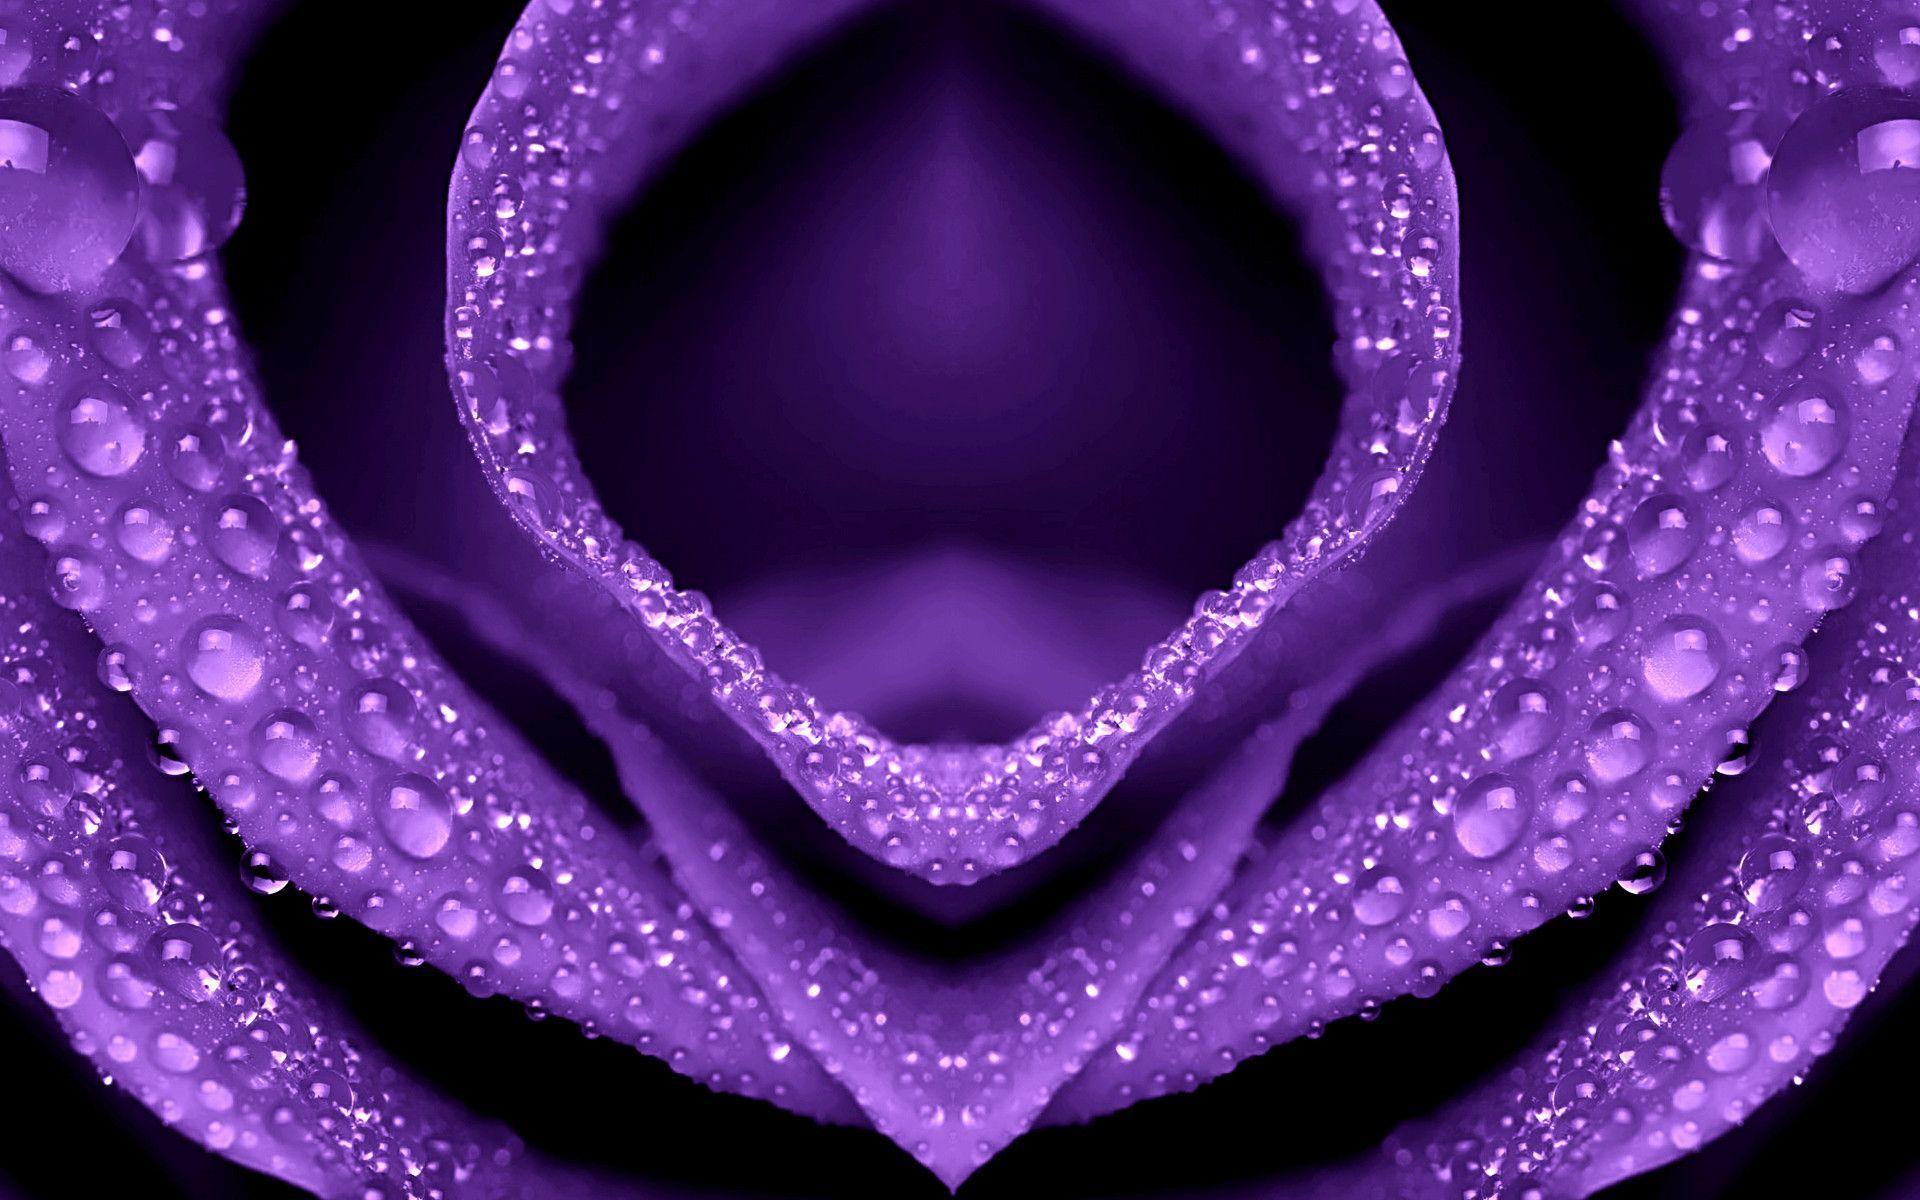 Purple Flowers Wallpaper, Free Image, Top Flowers Image